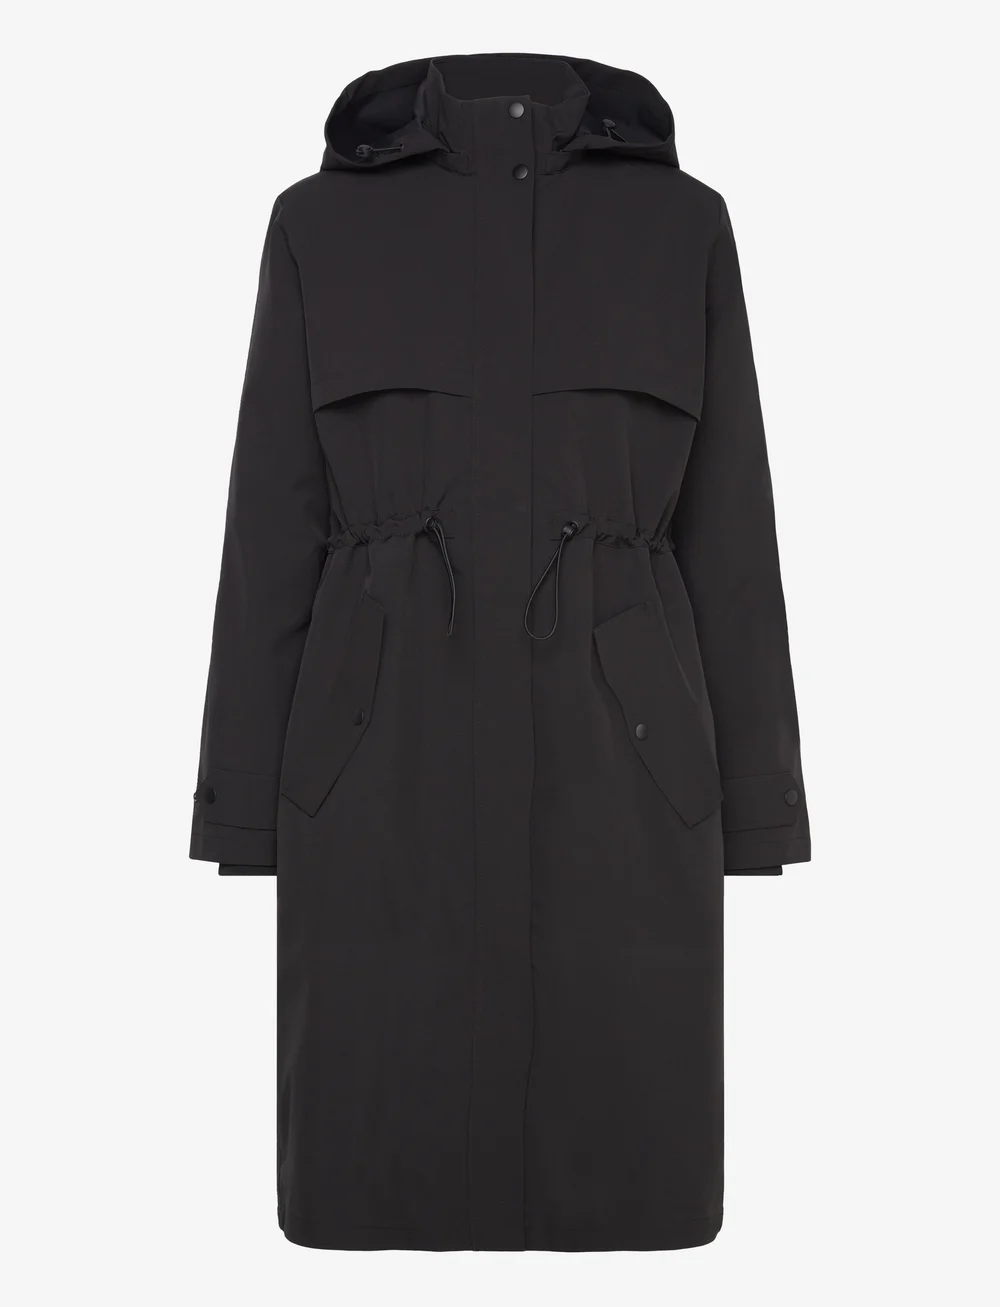 Selected Femme Slfibbi Tech Jacket (Black/Zwart) - 150.00 € | Boozt.com